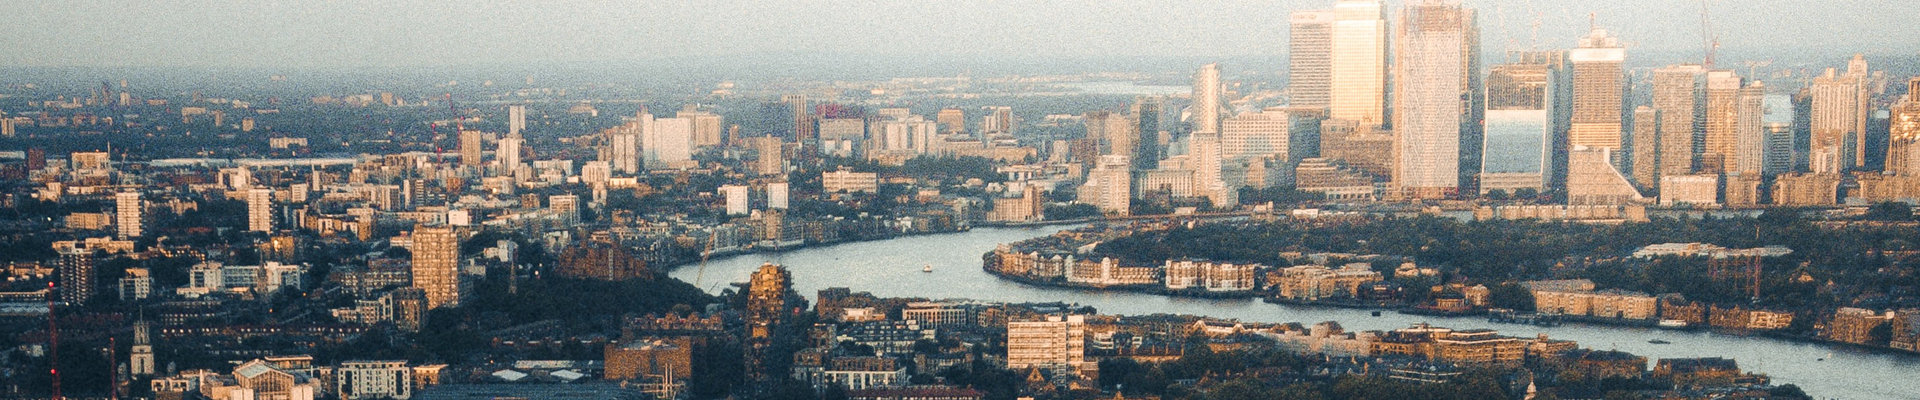 An aerial view of Tower Bridge London